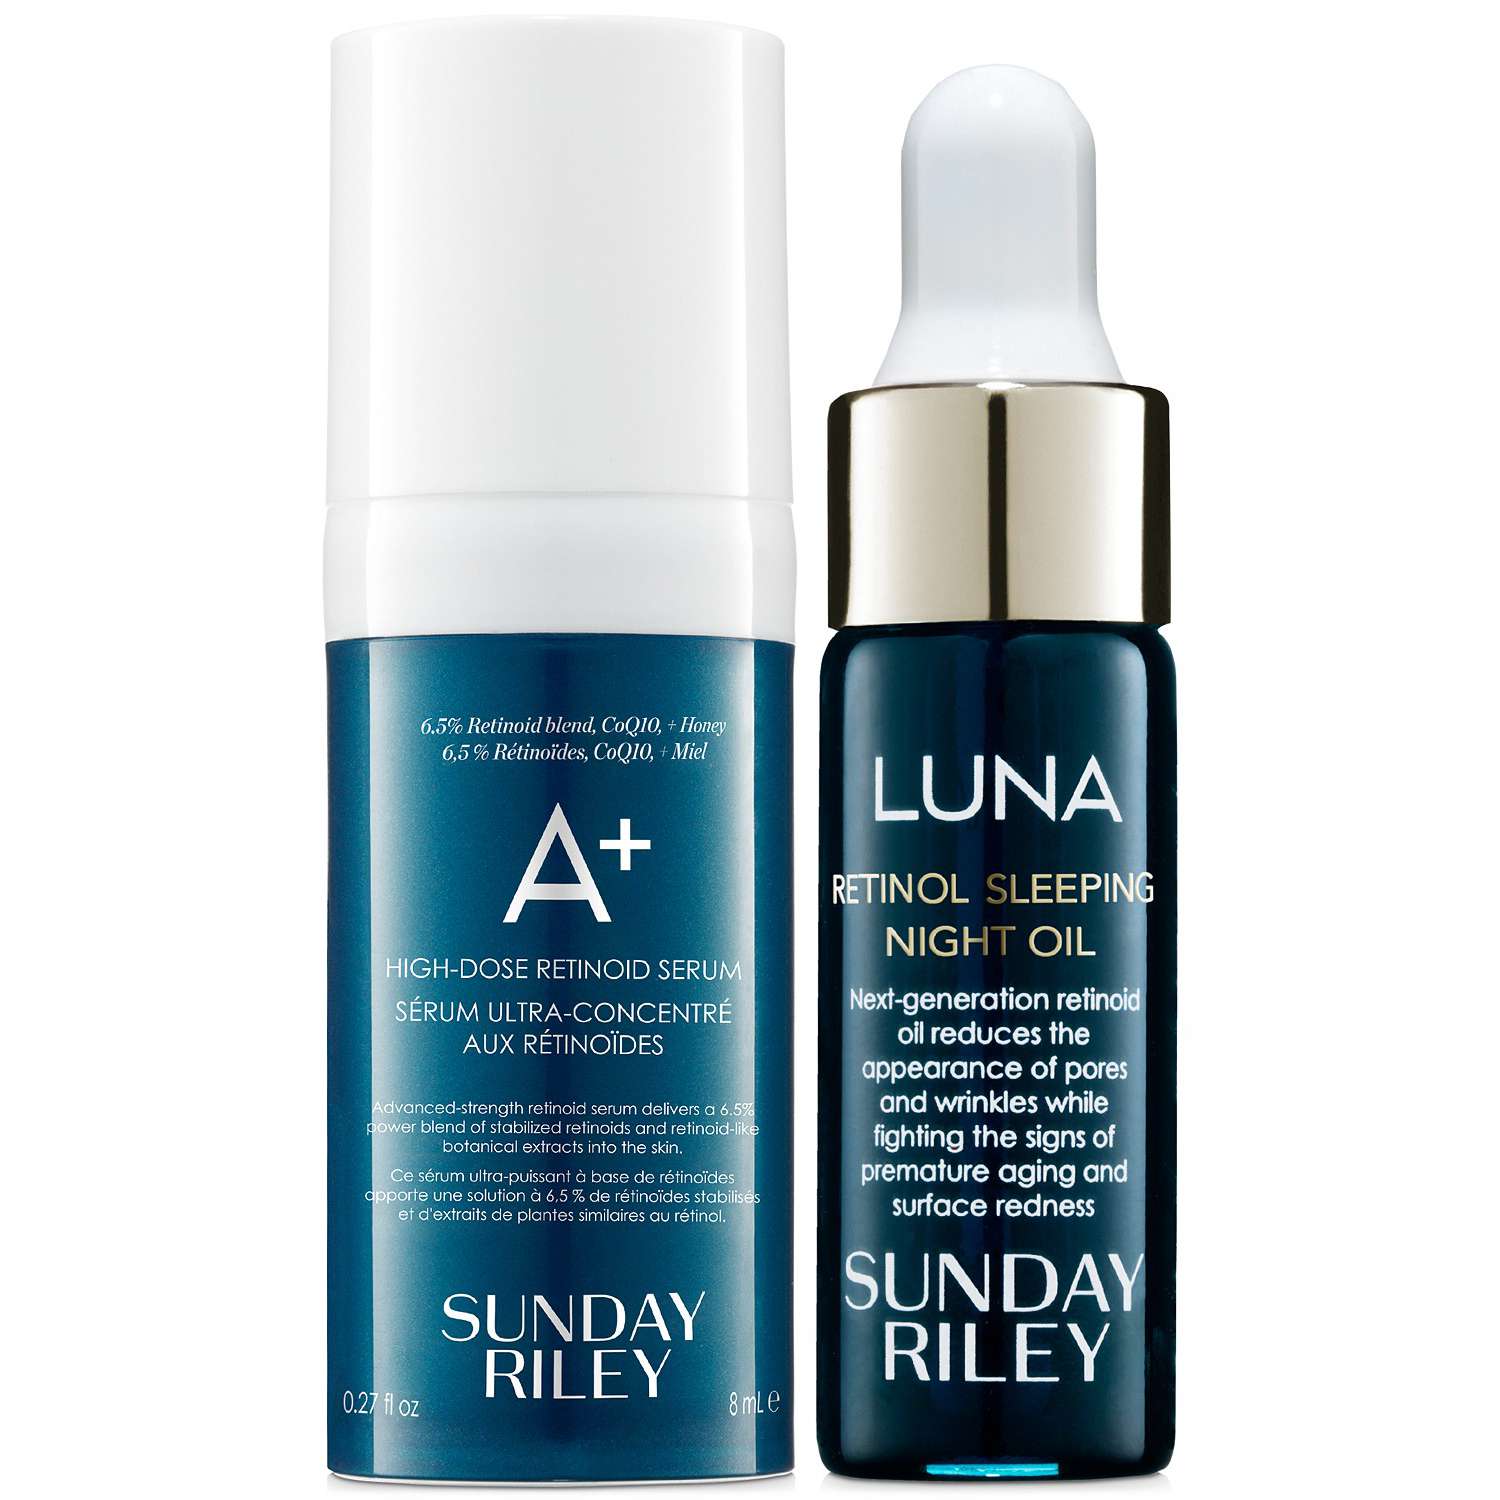 Sunday Riley A+ and Luna Retinol Trial set from Macys with Sunday Riley A+ High Dose Retinoid Serum and Luna Sleeping Night Oil